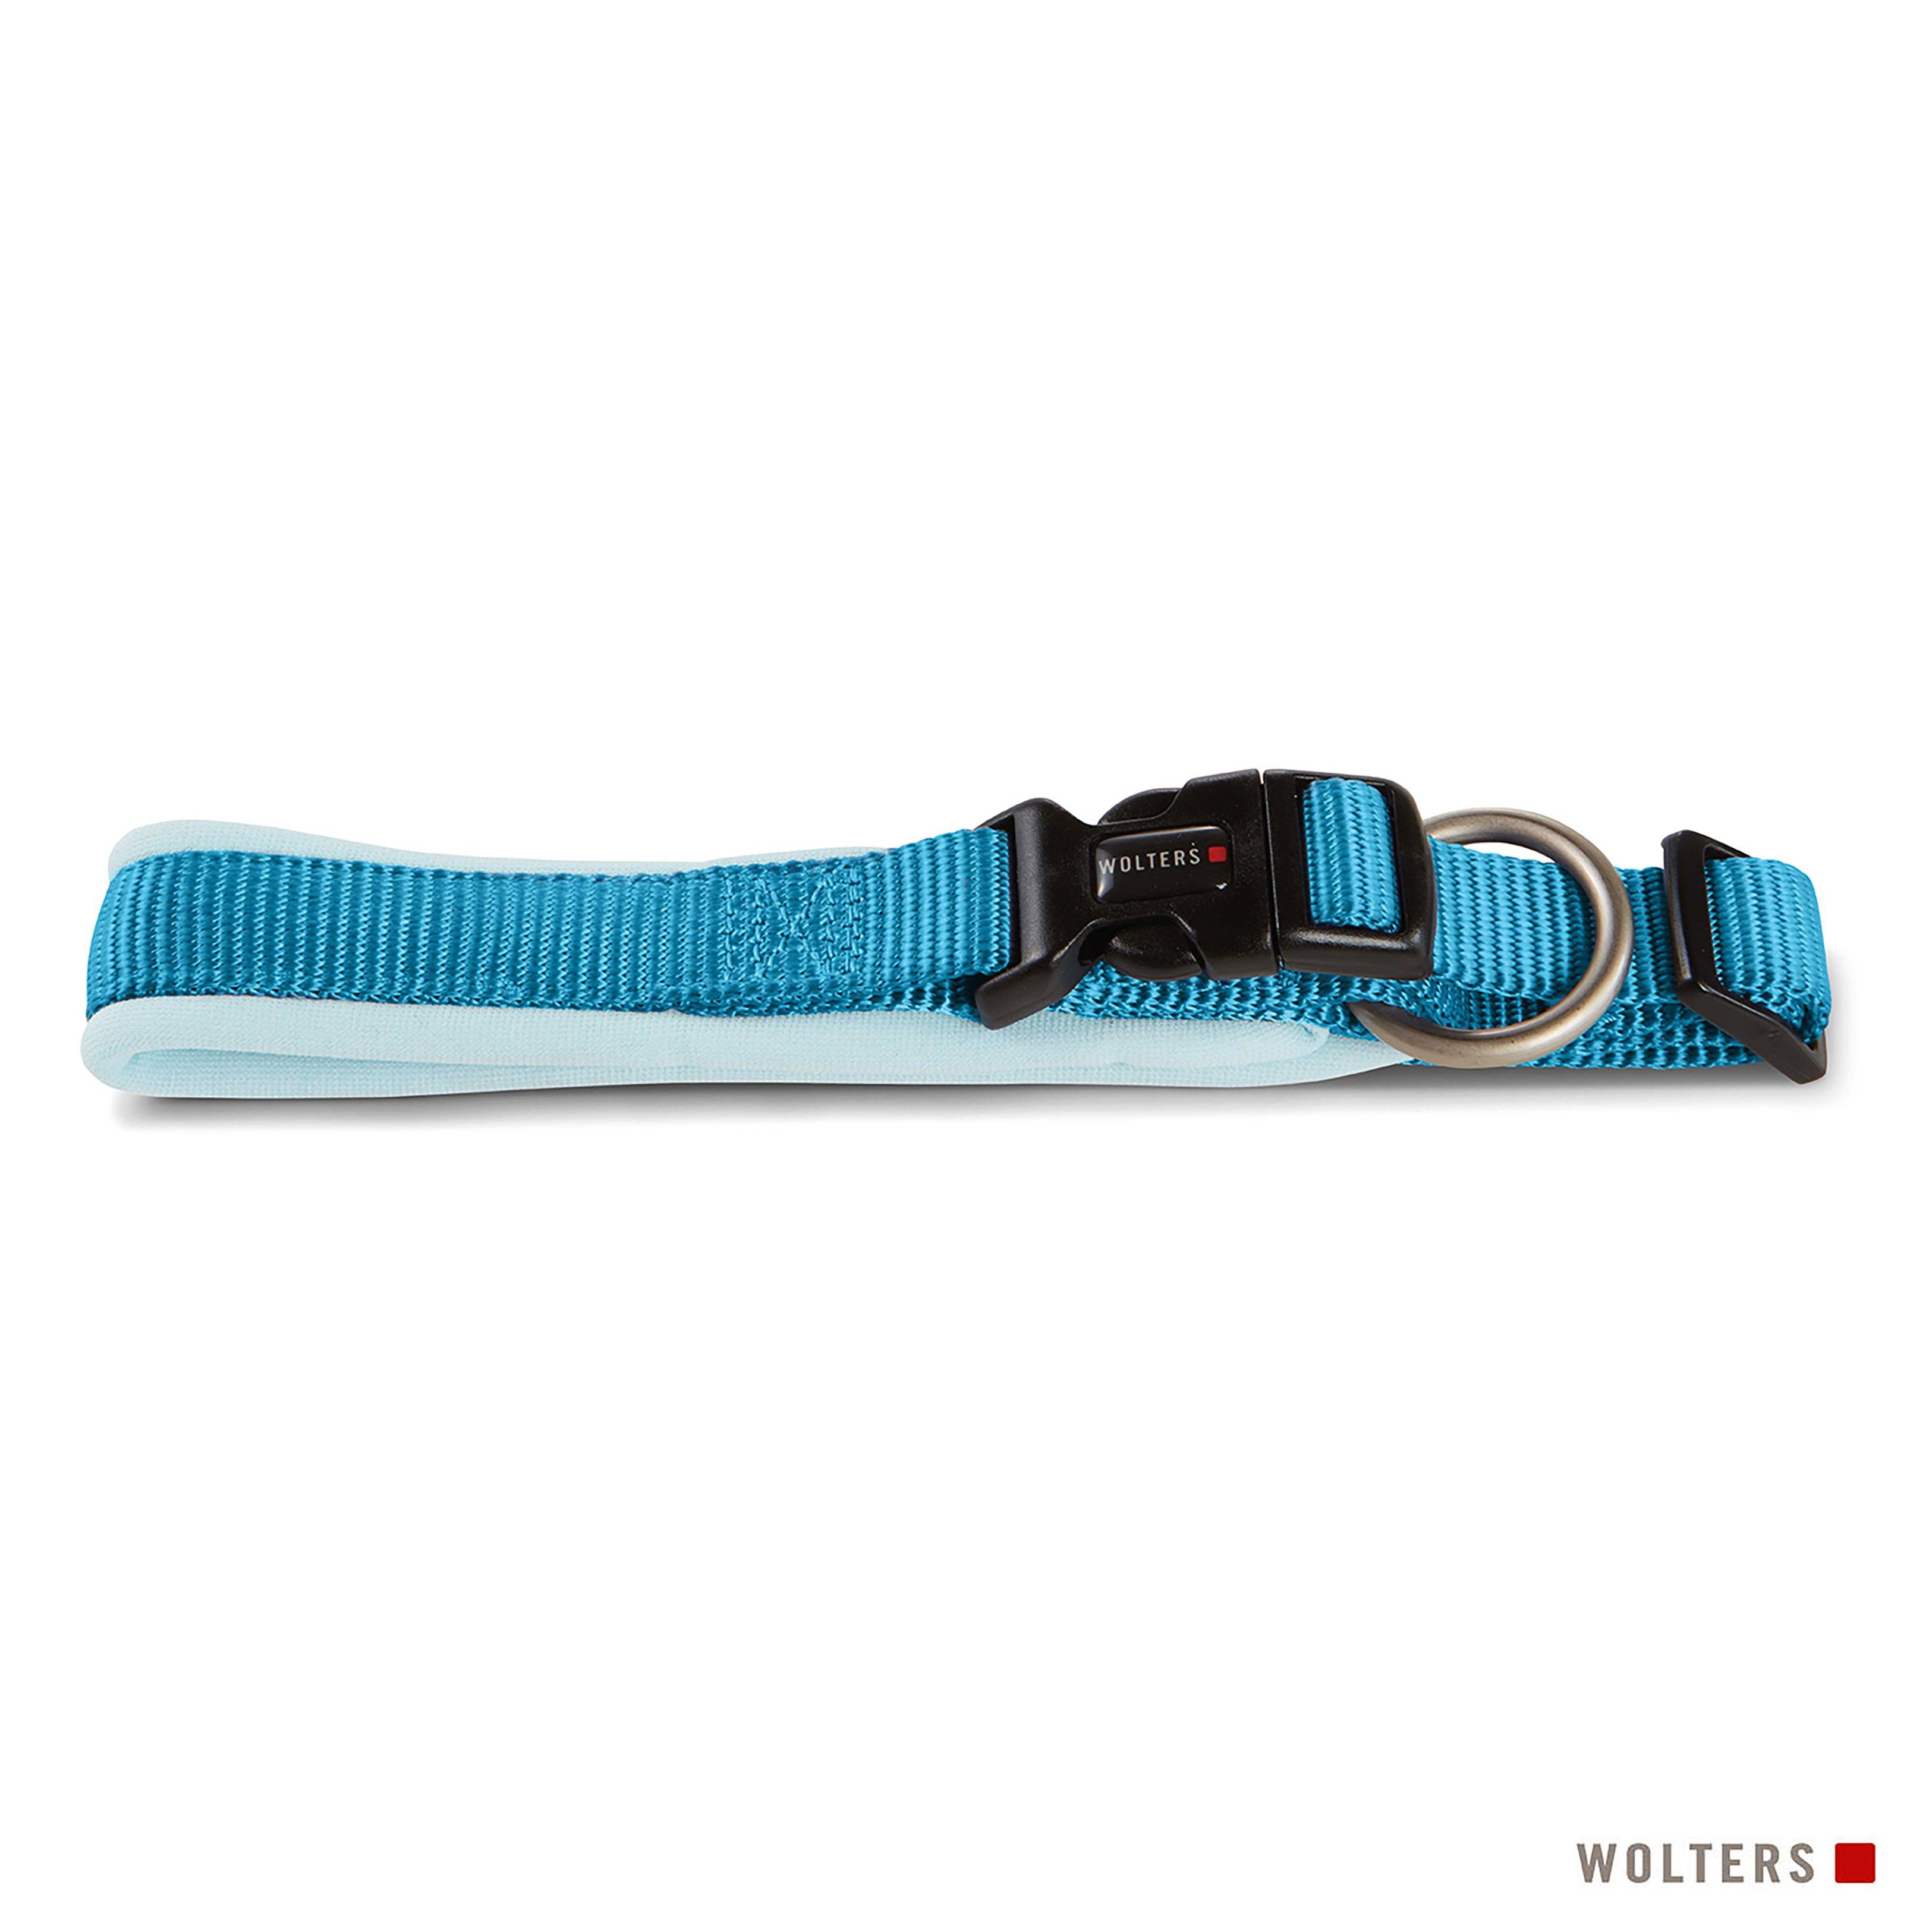 Wolters Hunde-Halsband Professional Comfort Halsband, Nylon, Neopren, in verschiedenen Größen, gepolstert